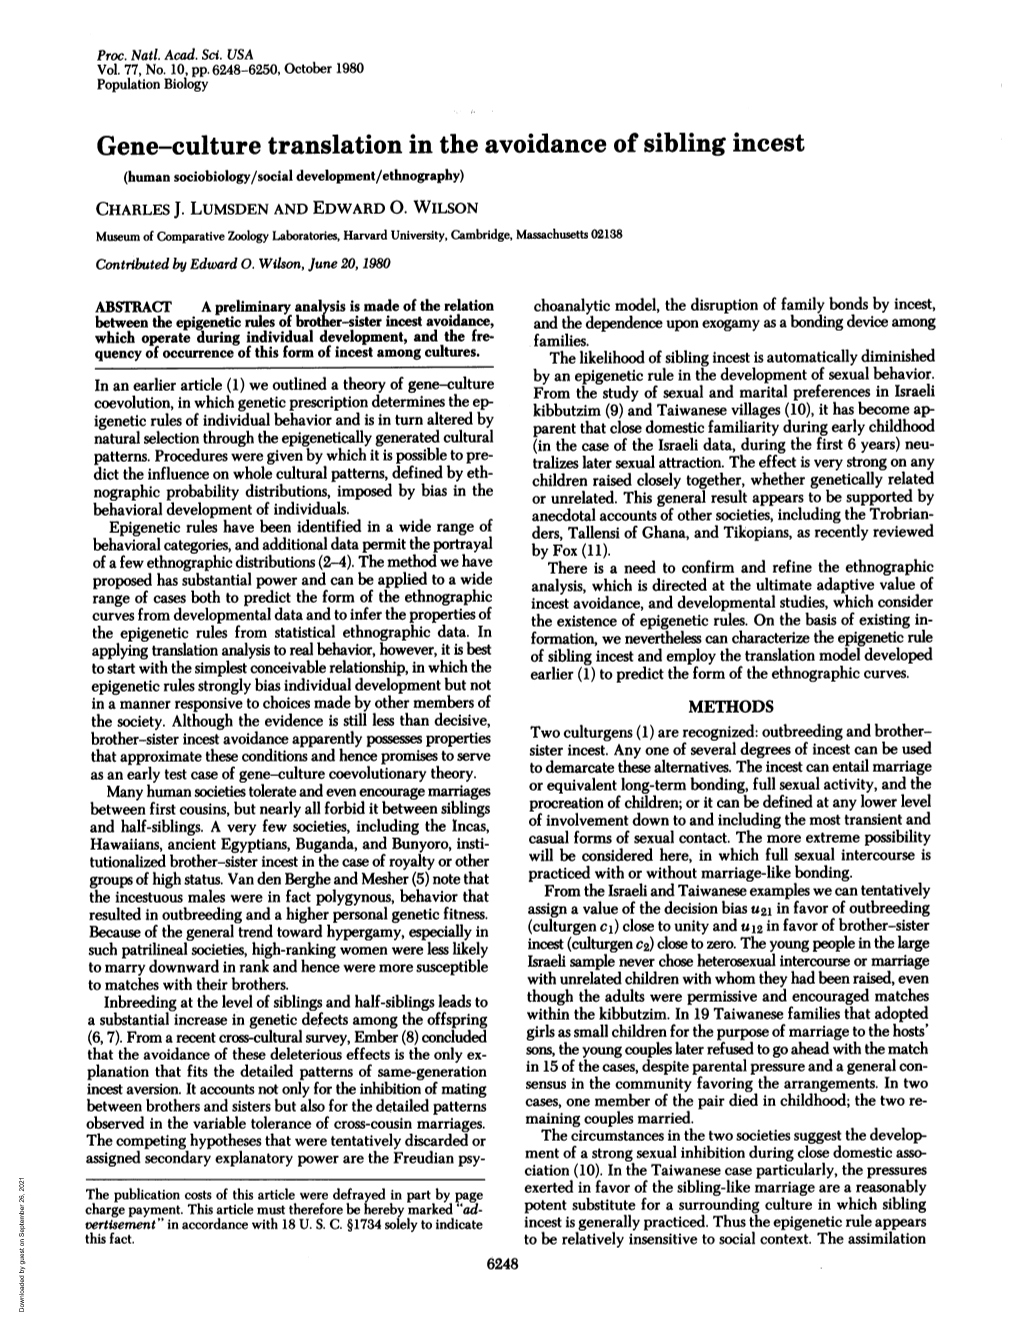 Gene-Culture Translation in the Avoidance of Sibling Incest (Human Sociobiology/Social Development/Ethnography) CHARLES J